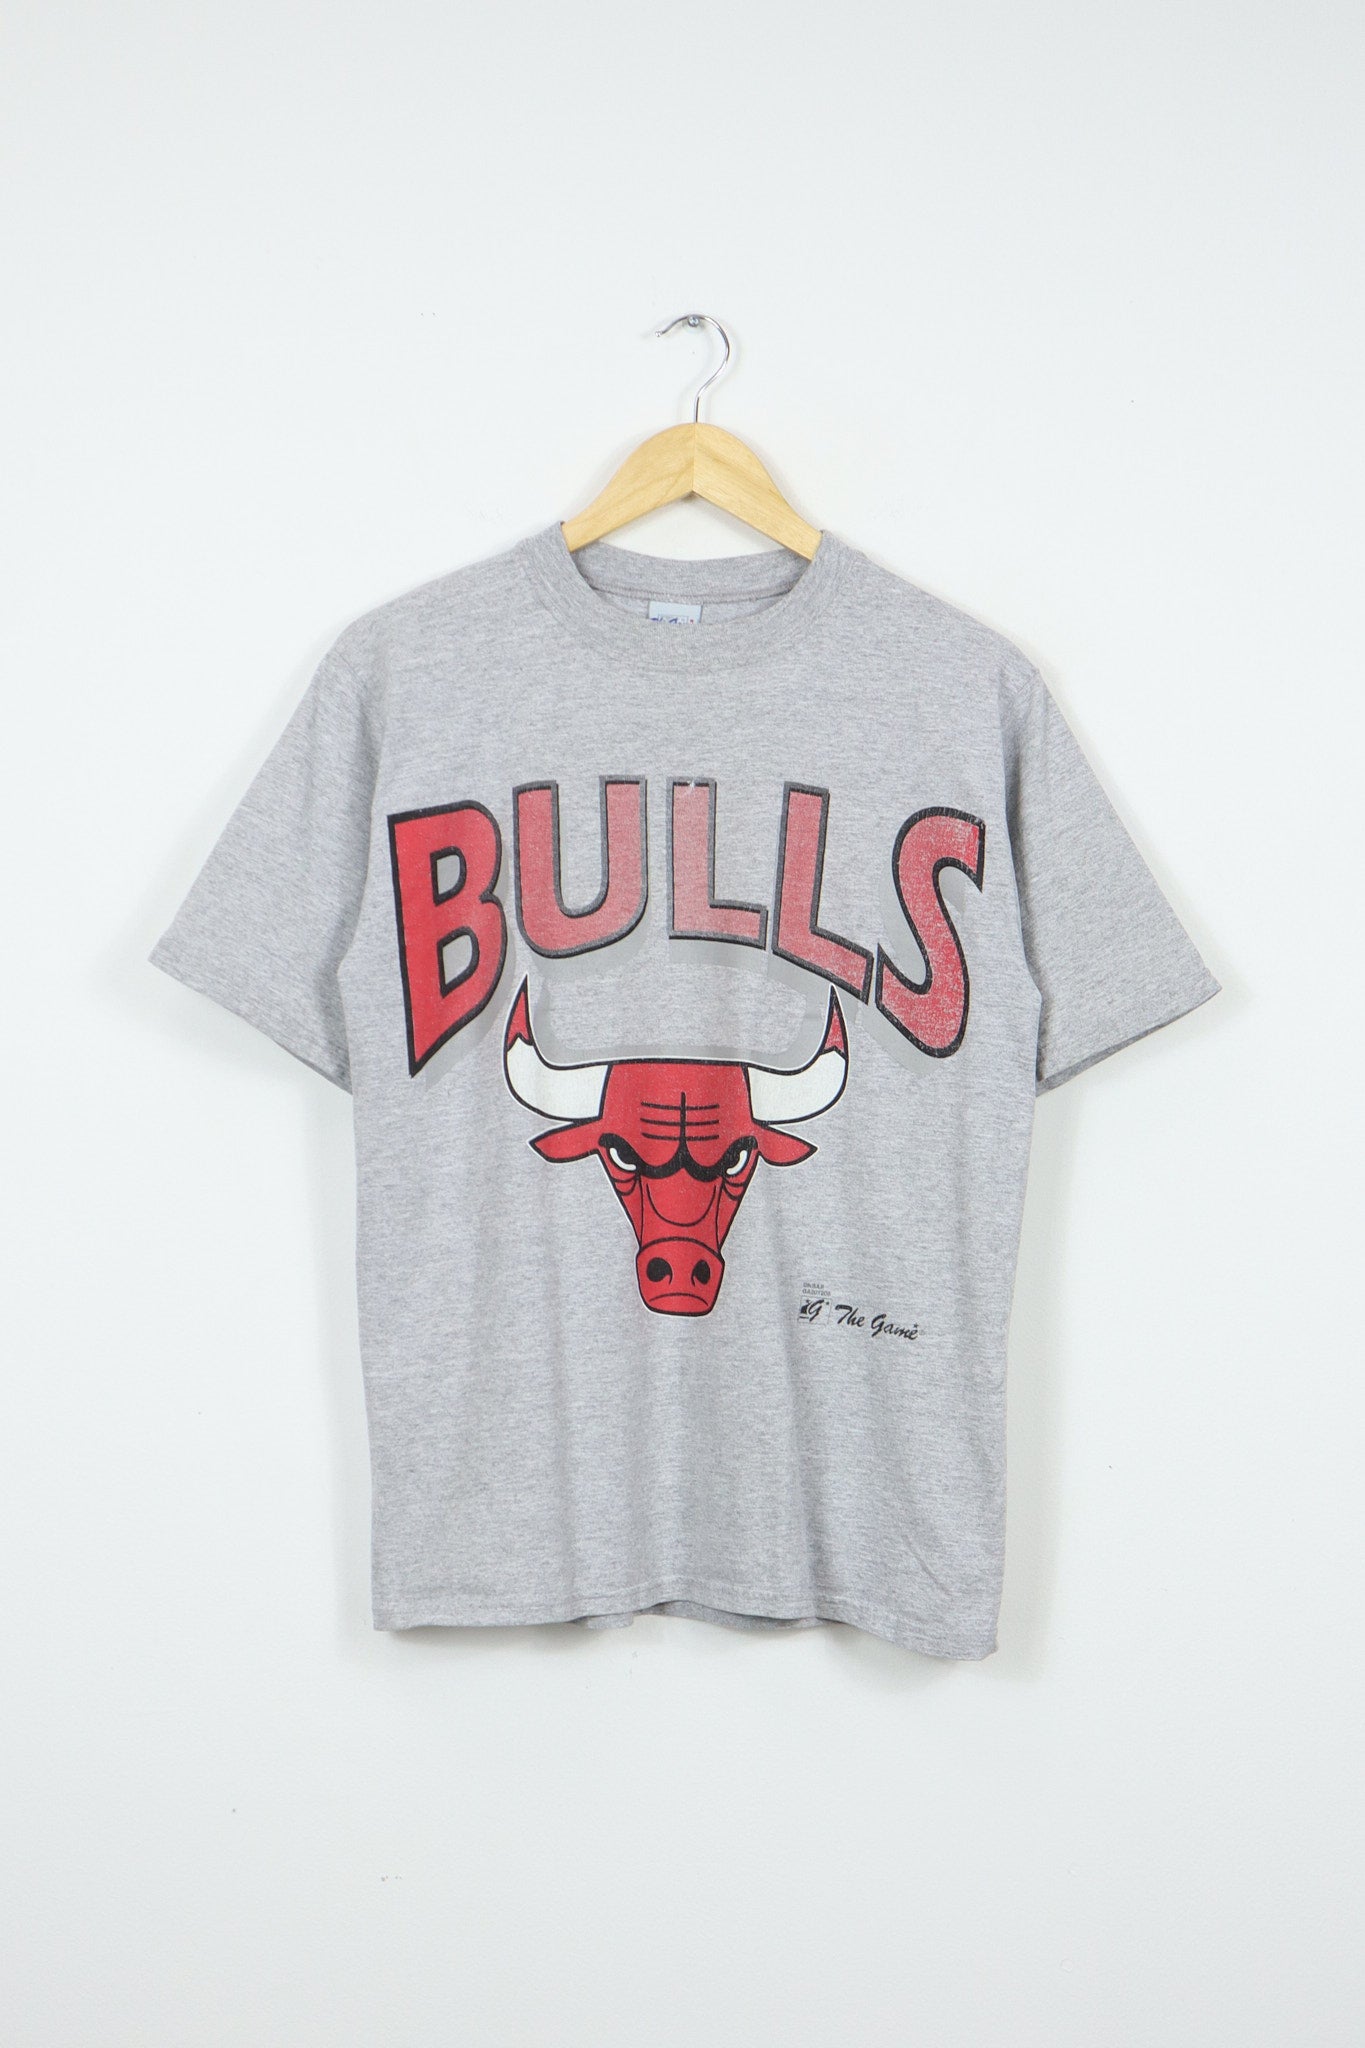 Vintage Chicago Bulls Tee